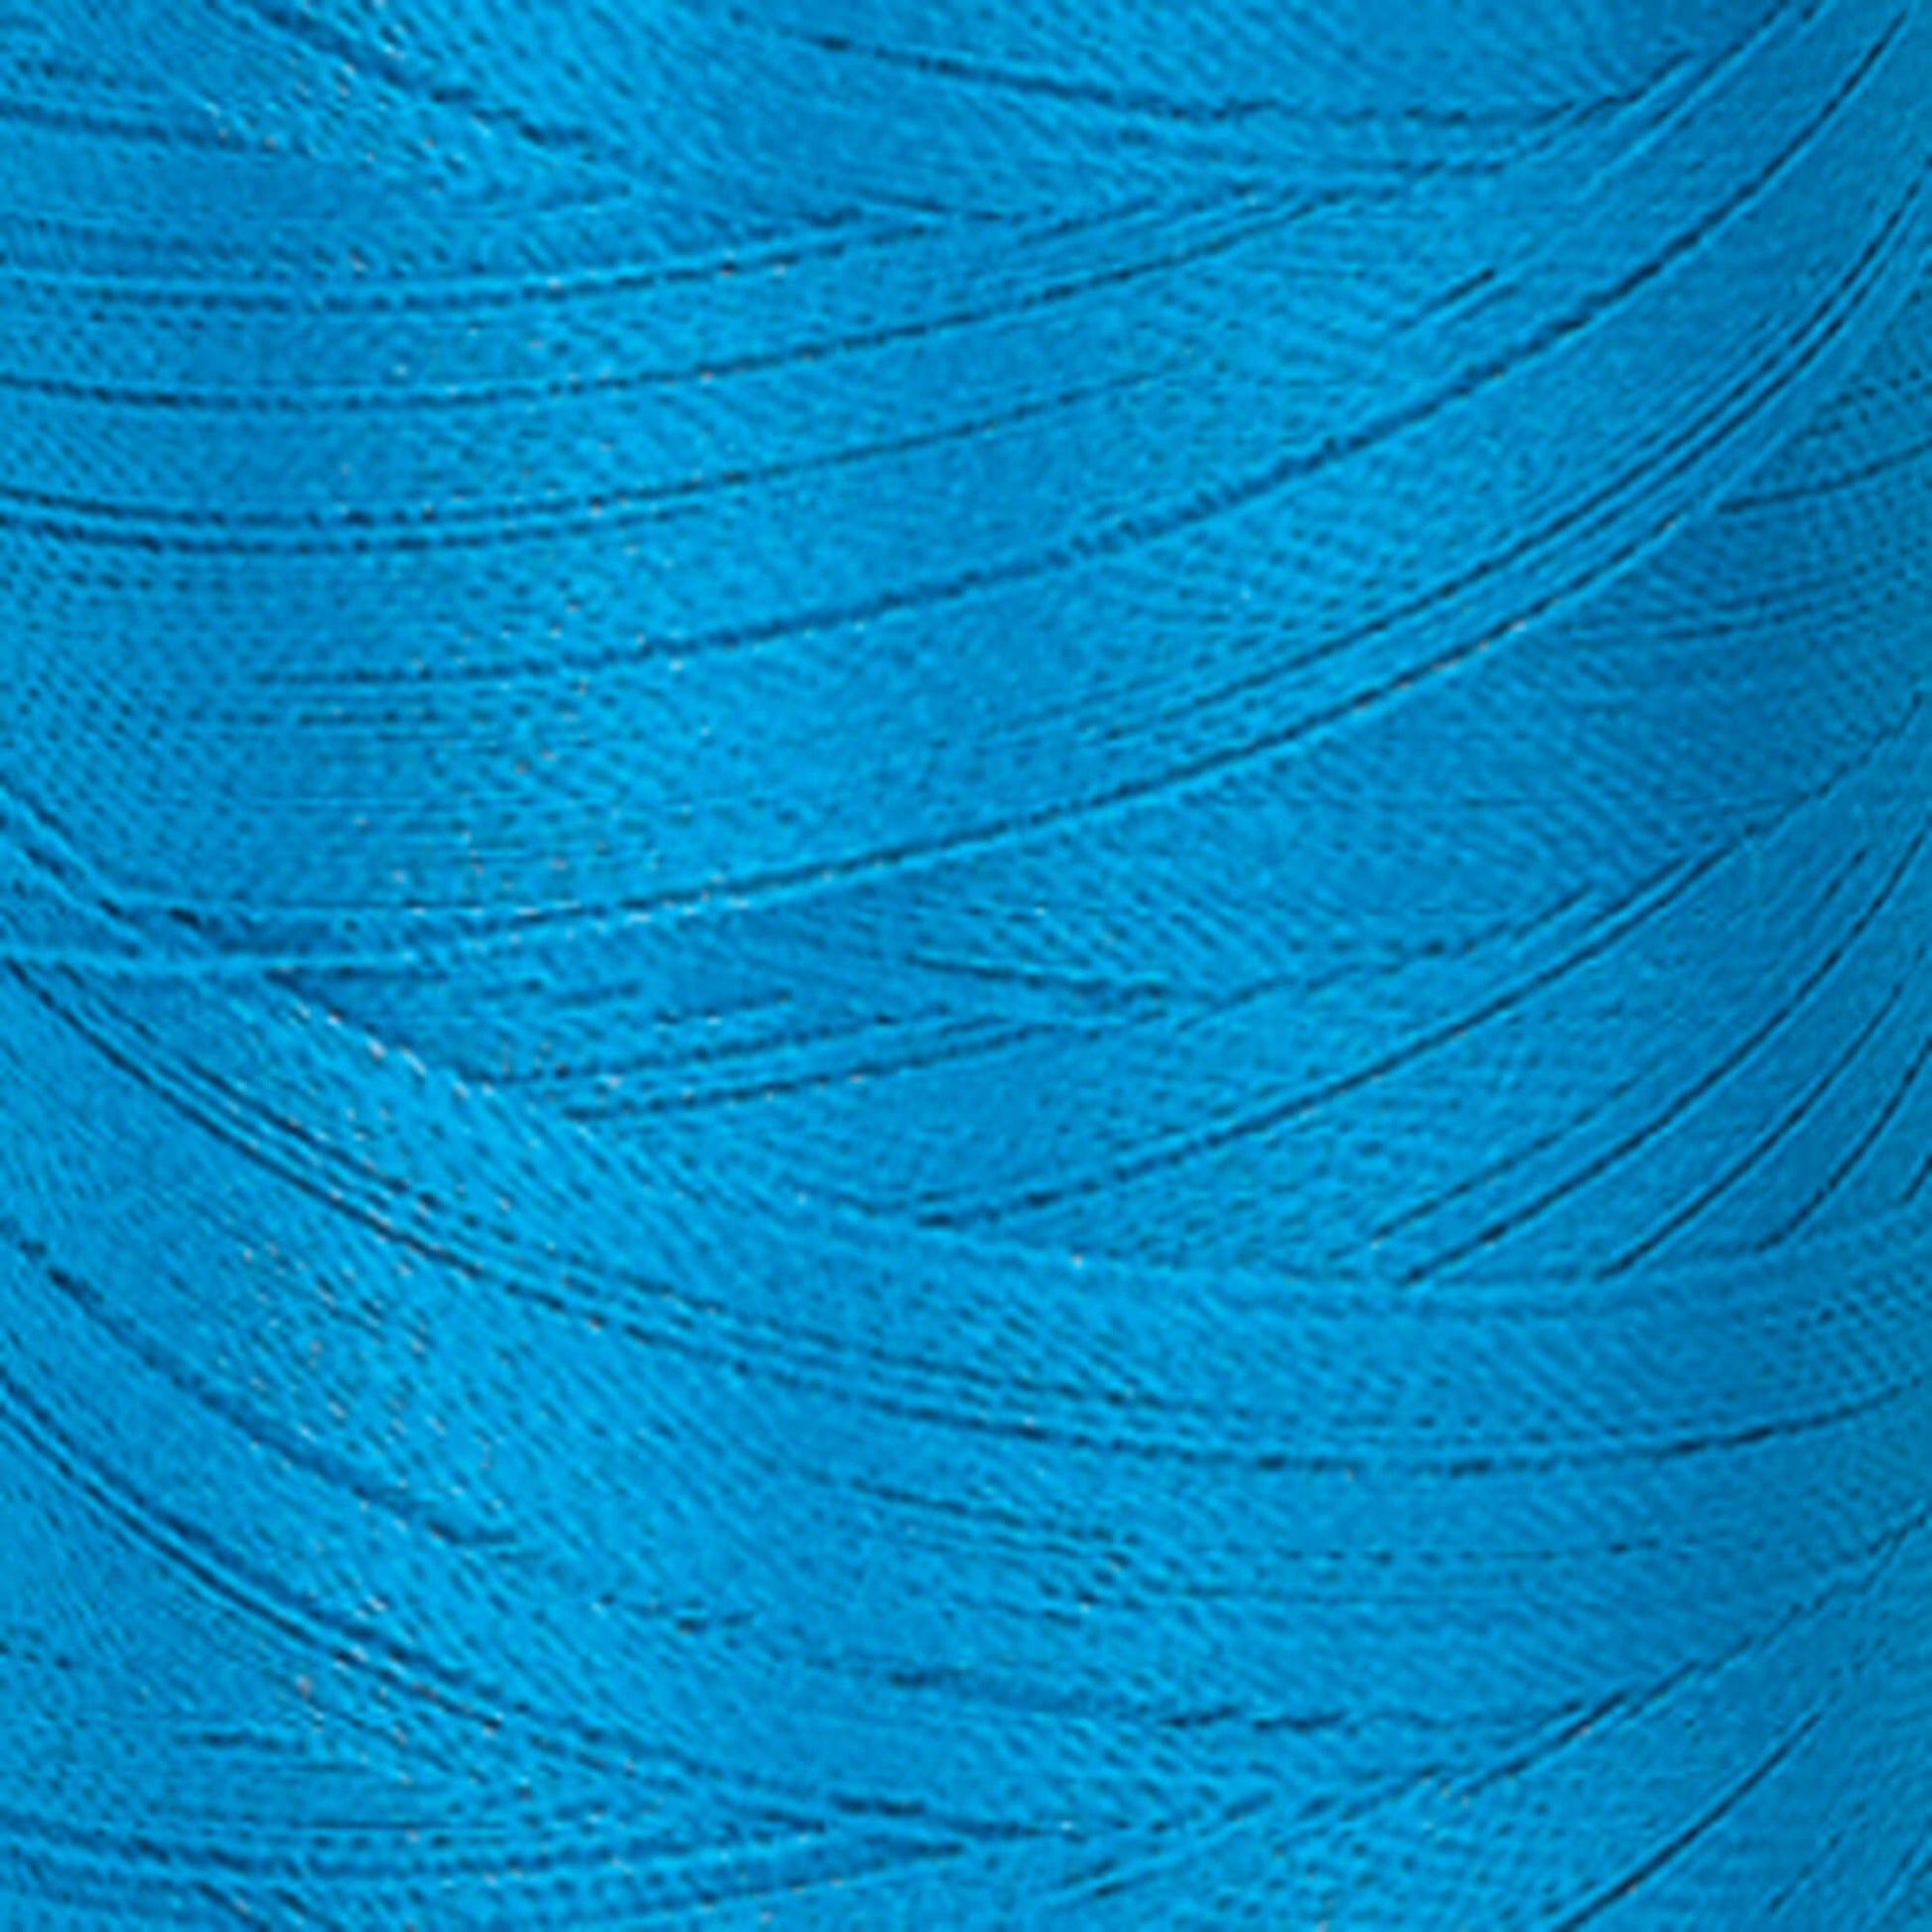 Coats & Clark Machine Embroidery Thread (1100 Yards) Radiant Blue